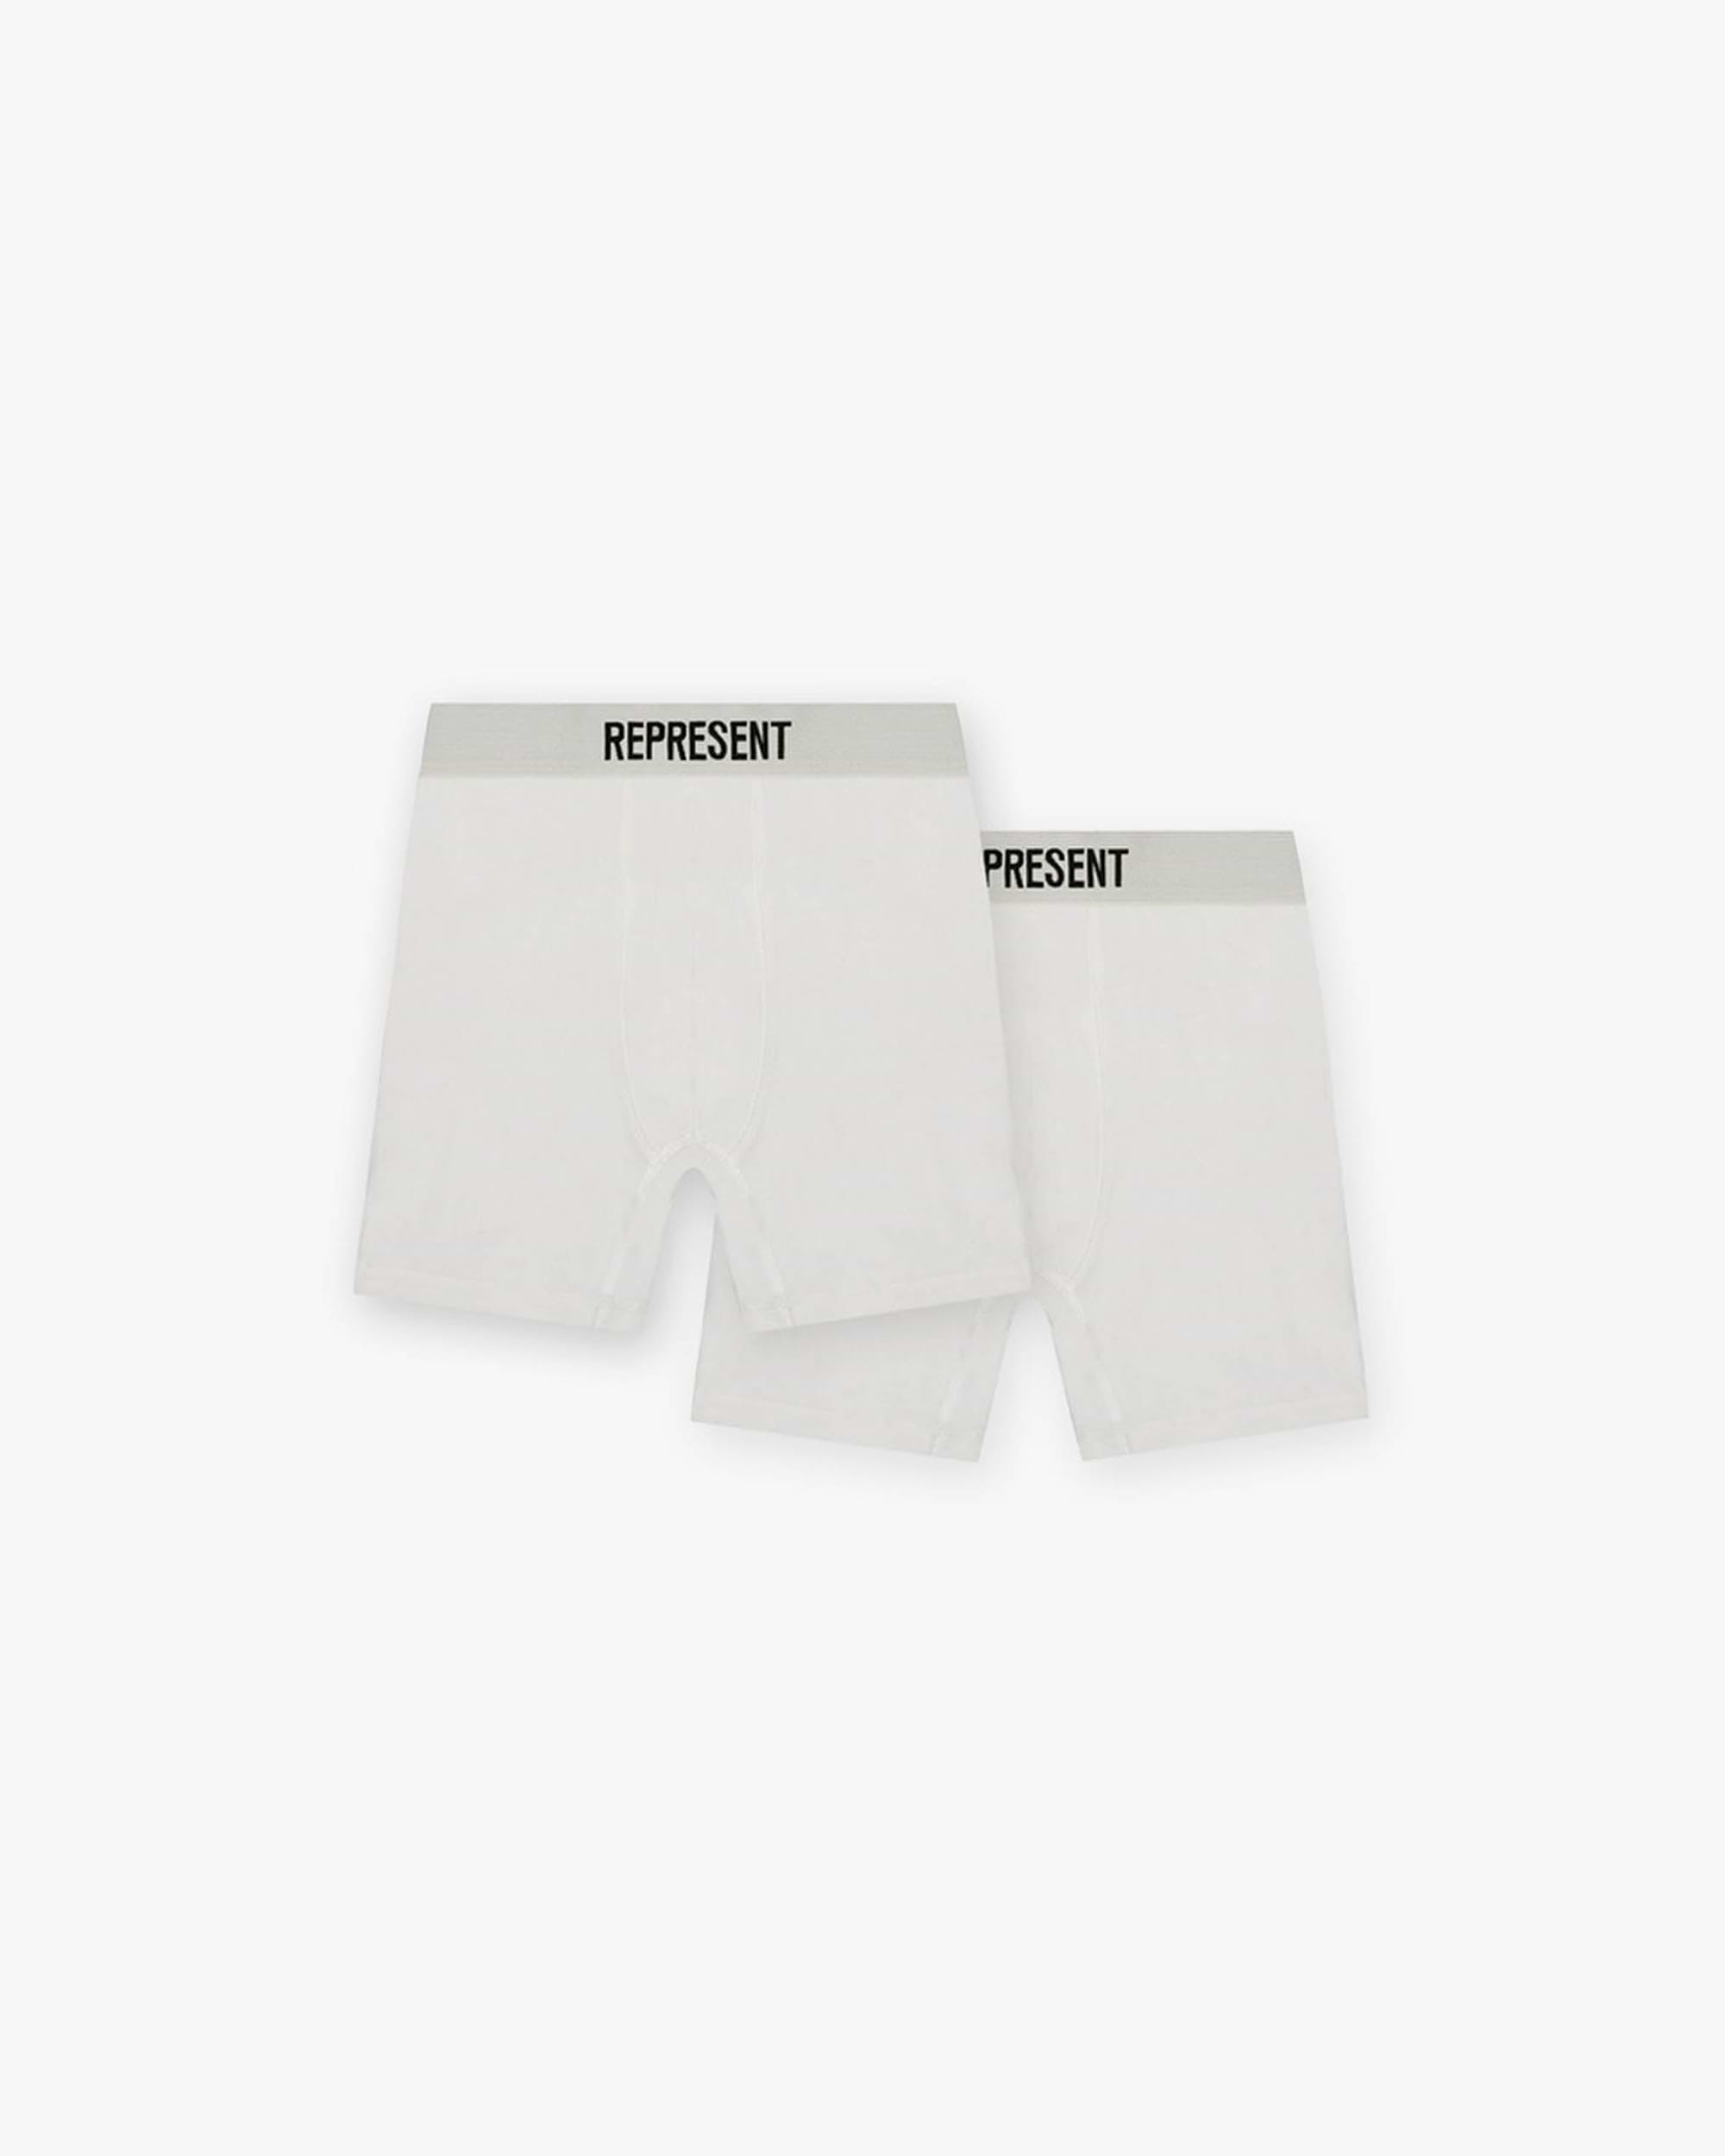 Represent Boxers 2 Pack | Flat White Accessories FW22 | Represent Clo